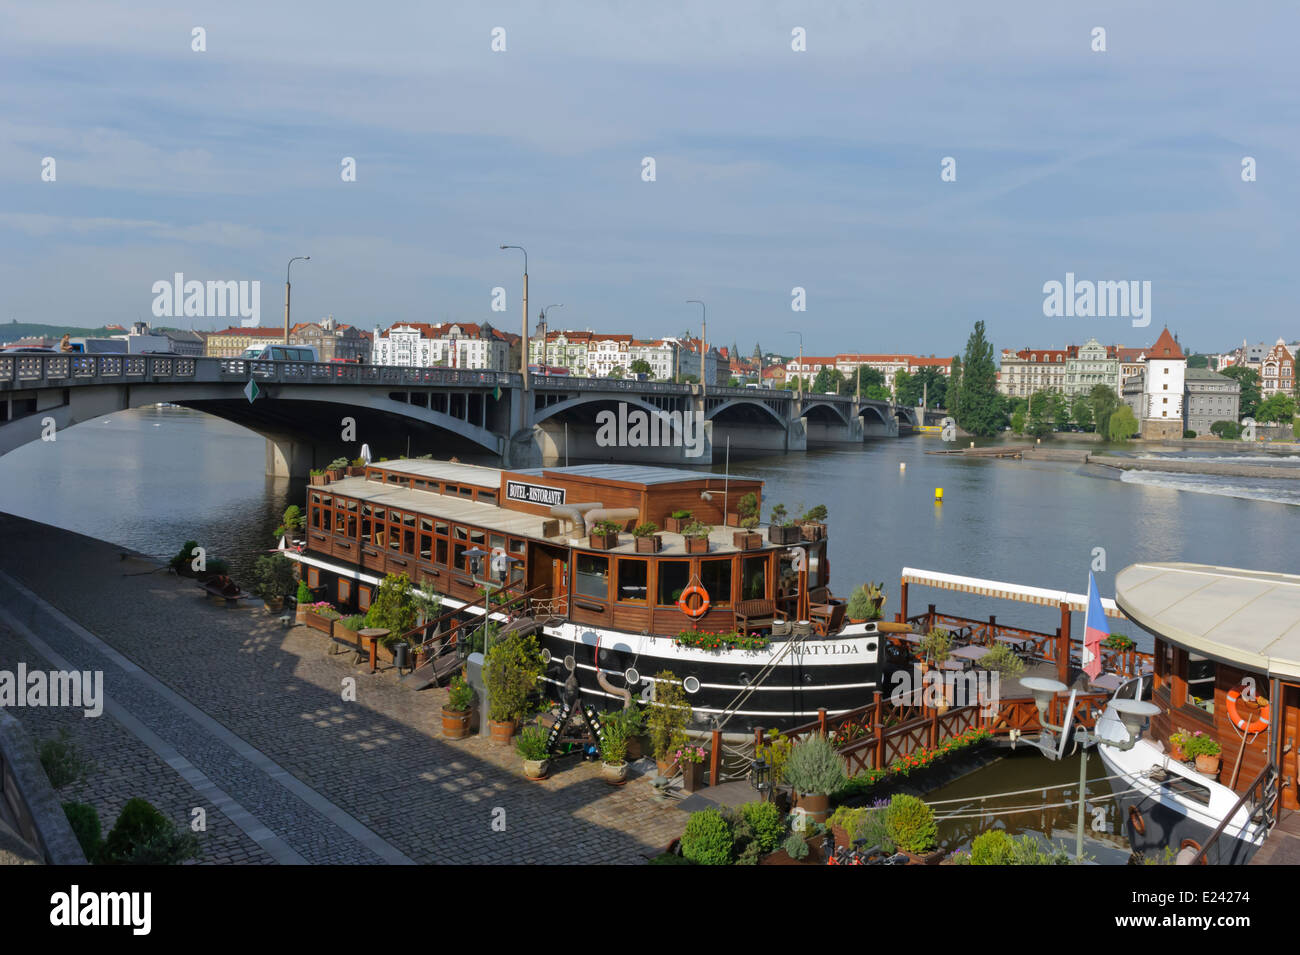 A floating restaurant 'Matylda' on the river, Prague, Czech Republic. Stock Photo